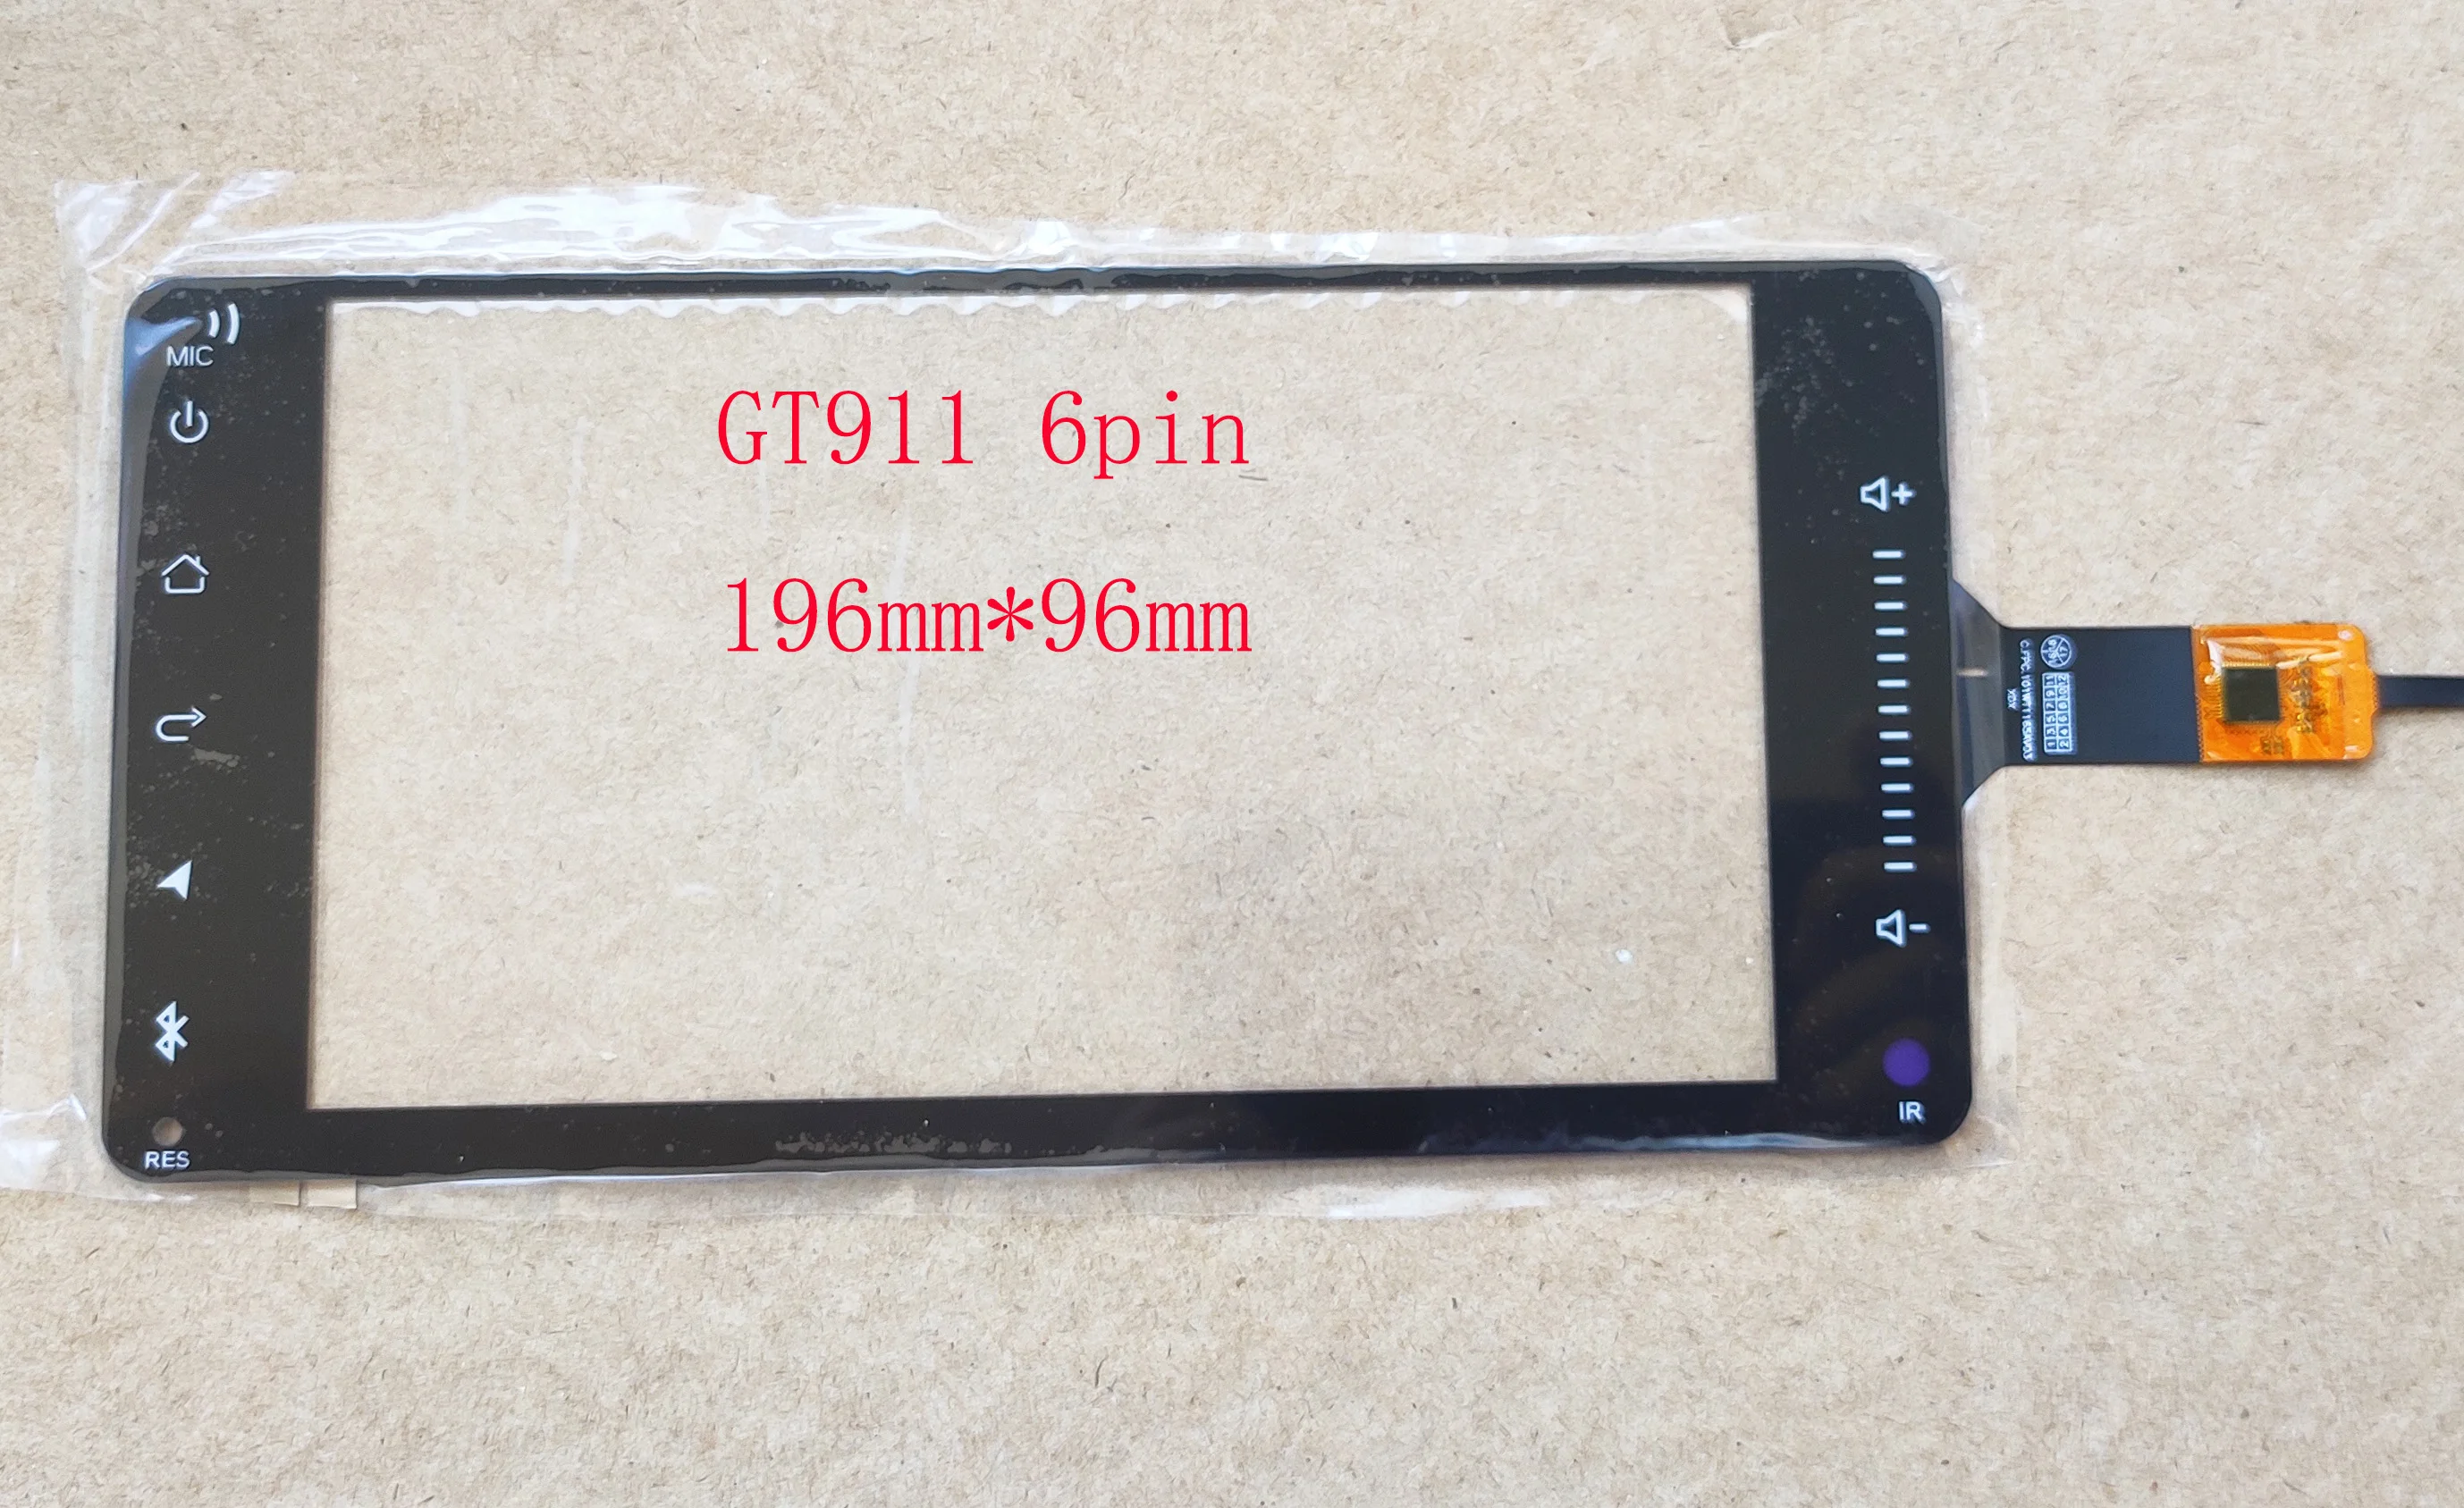 

6.9 7inch Touch Screen196m*96mm Livina Sena Digitizer Sensor GT911 6pin VIOS CROWN CAMRY COROLLA RAV4 C.FPC.101WT1165AV03 XC-019